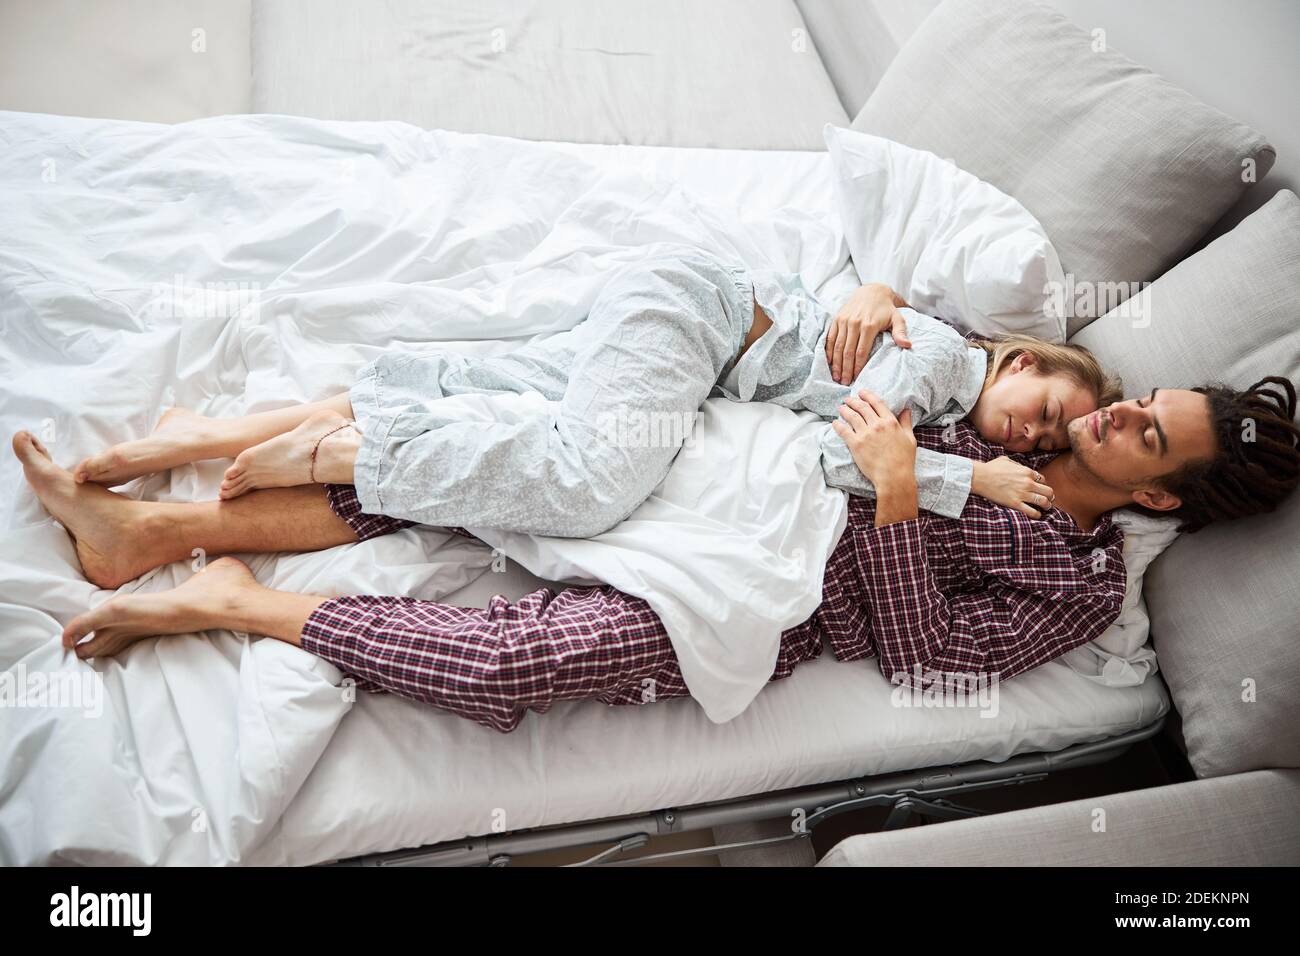 https://c8.alamy.com/comp/2DEKNPN/beautiful-couple-in-love-sleeping-together-in-bed-2DEKNPN.jpg